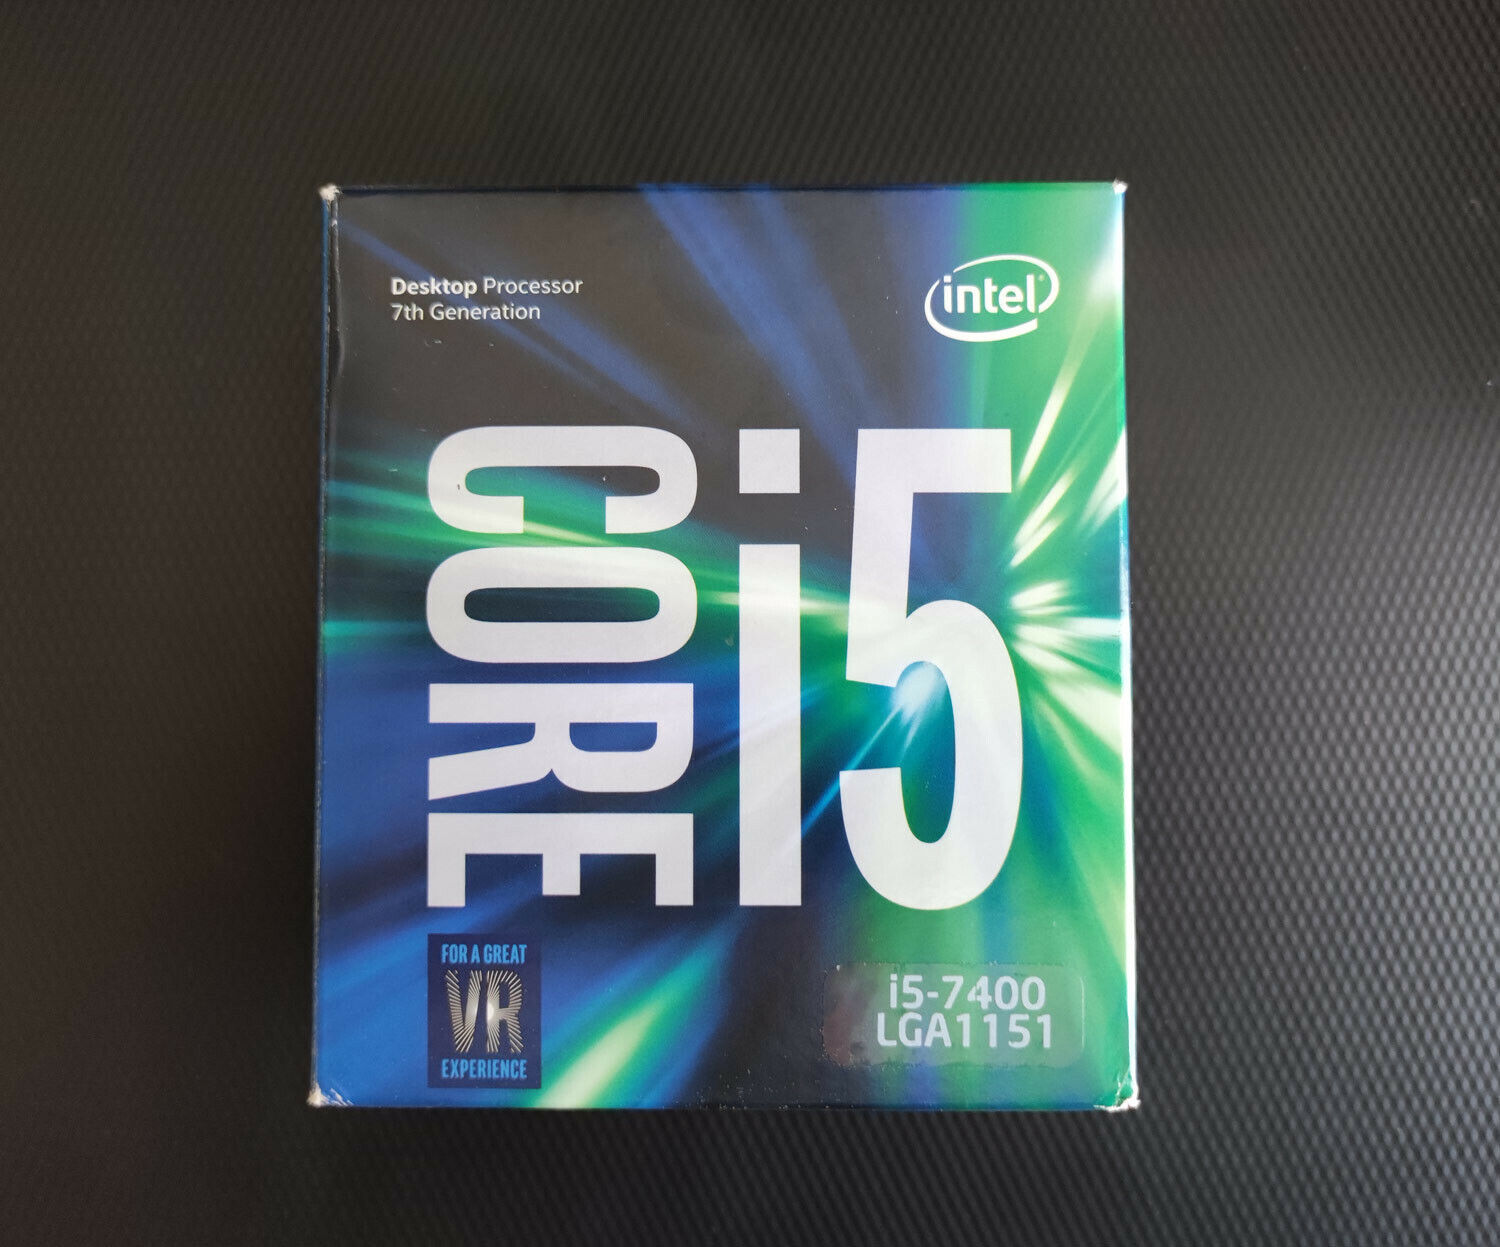 Intel Core i5 7400 3 GHz Quad-core (BX80677I57400) Processor for 